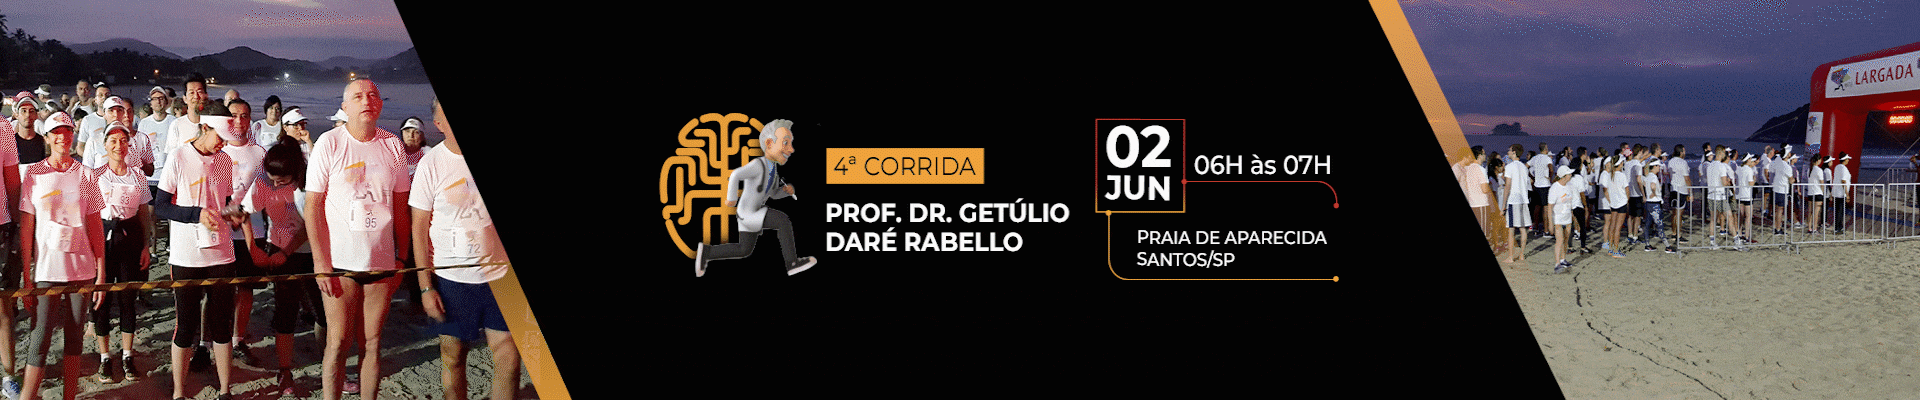 4ª Corrida Prof. Dr. Getúlio Dare Rabello